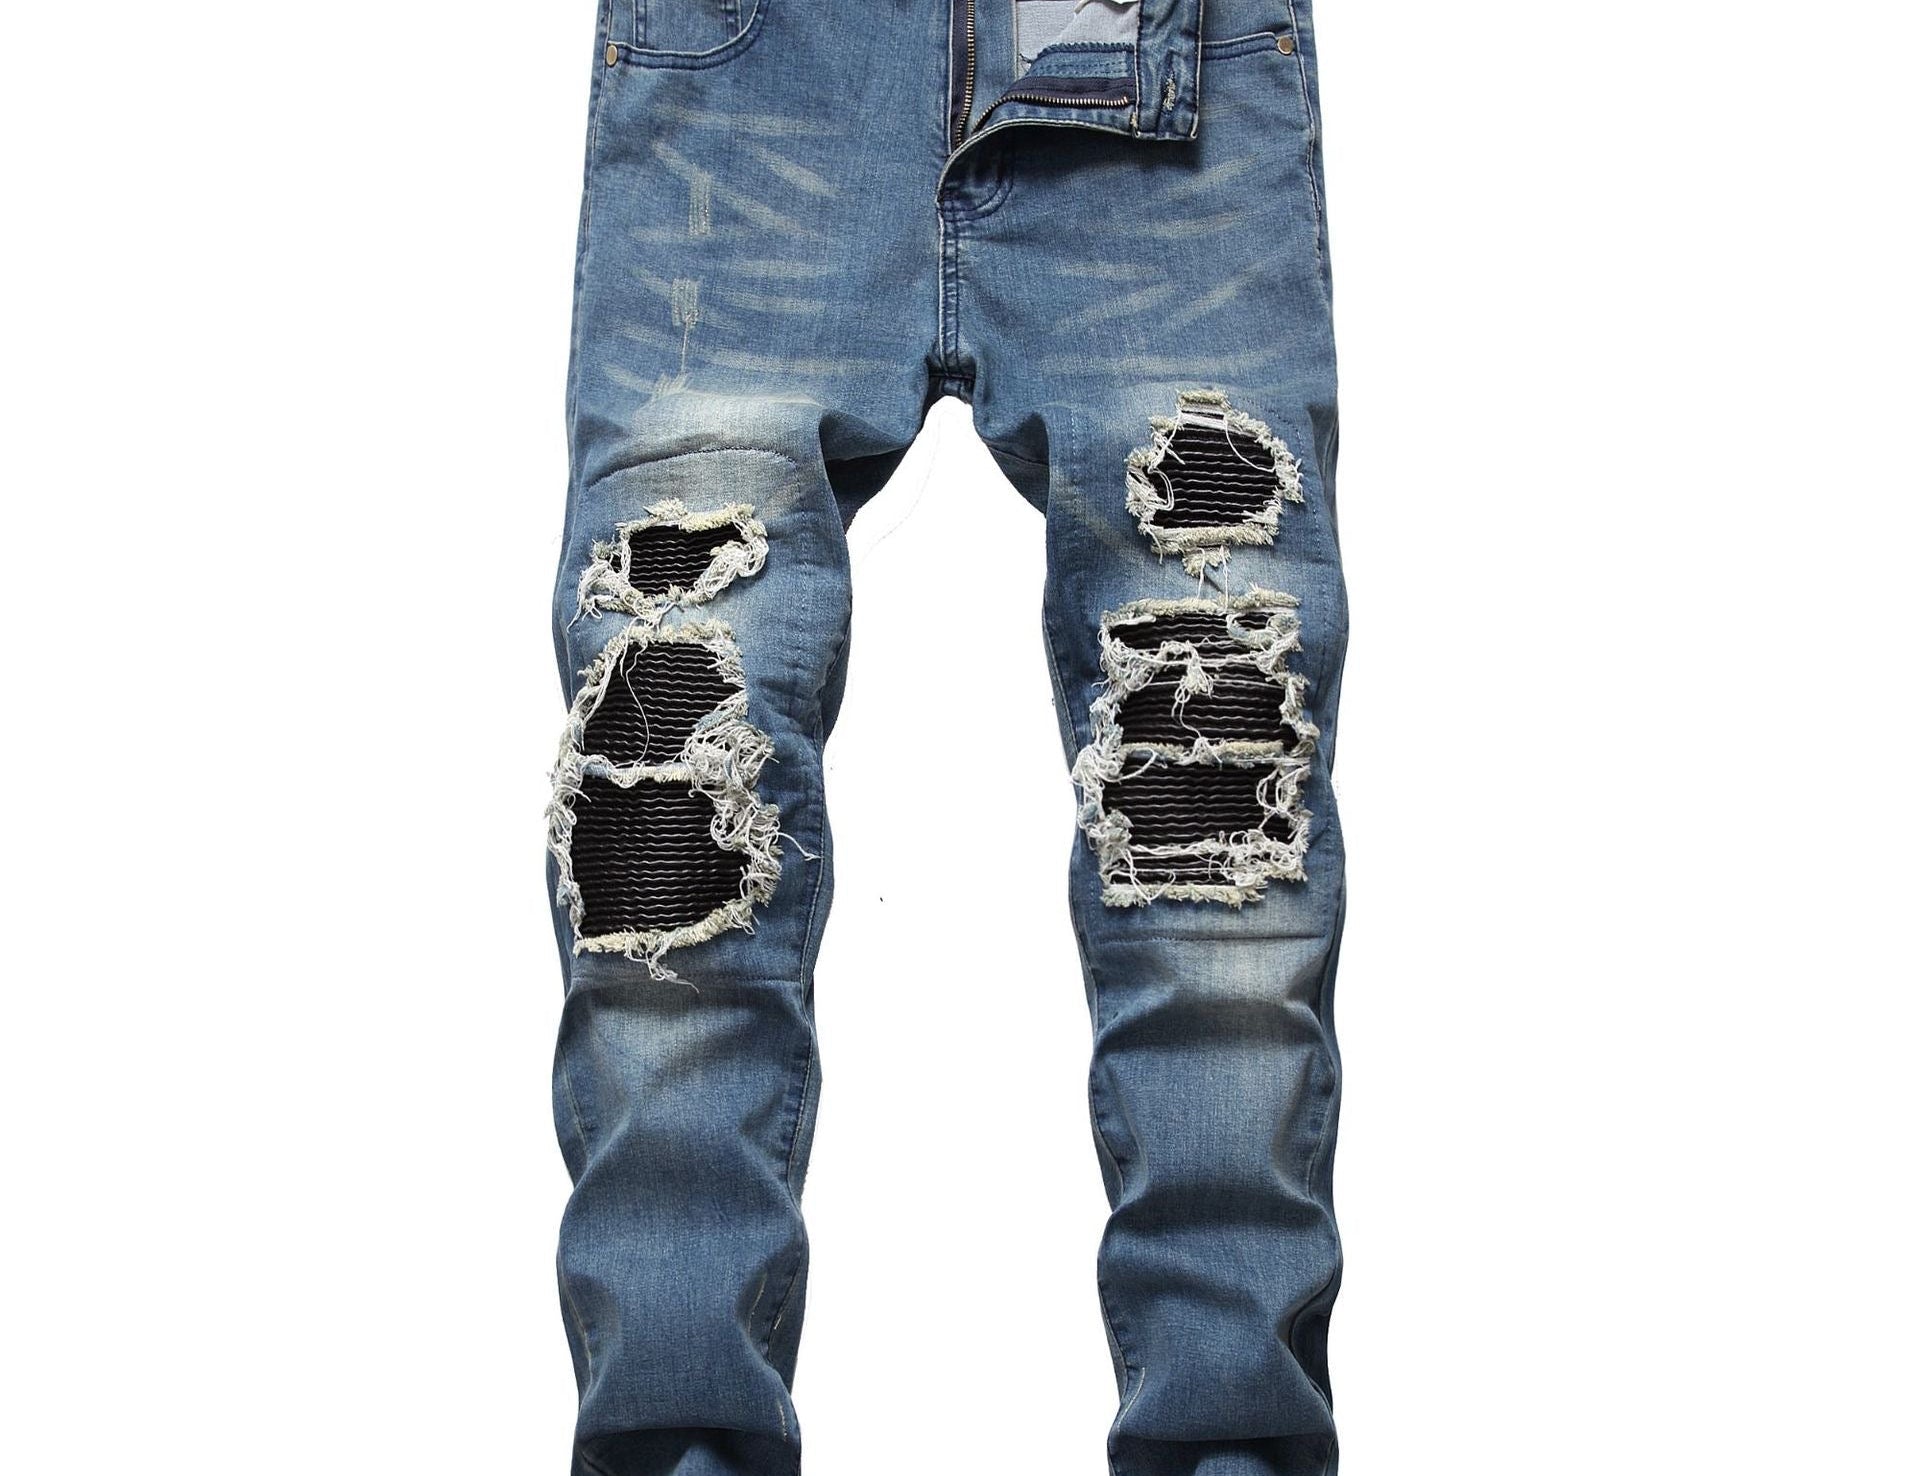 (Copy) BLUI - Denim Jeans for Men - Sarman Fashion - Wholesale Clothing Fashion Brand for Men from Canada